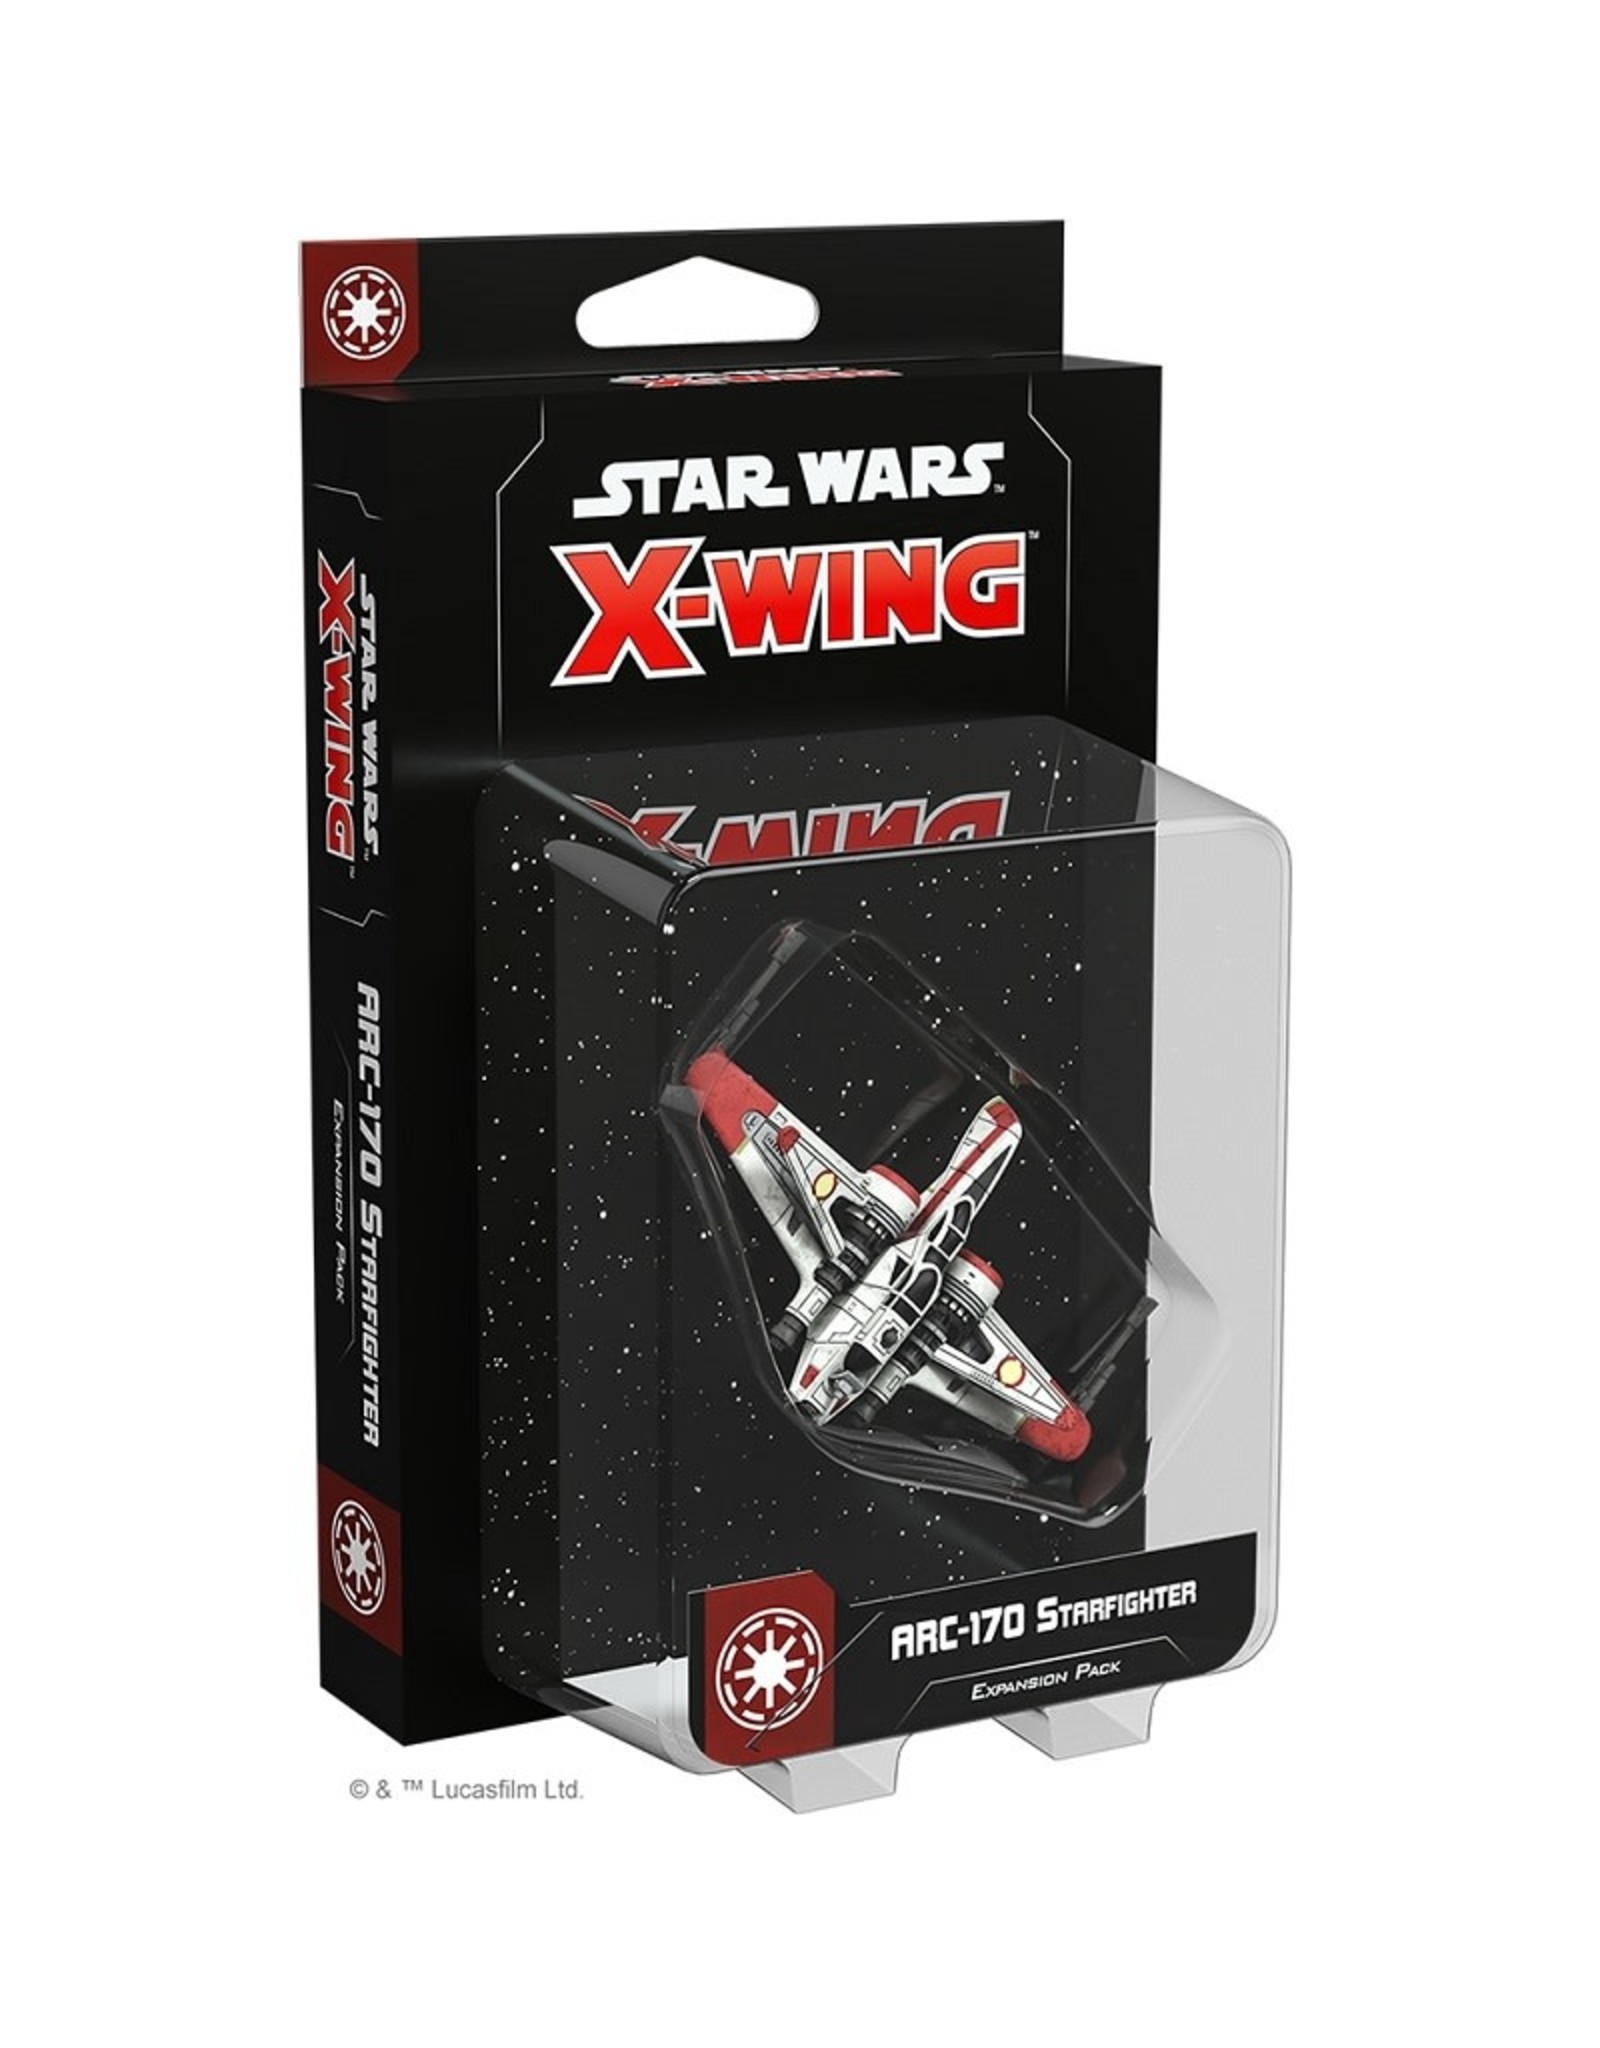 Atomic Mass Games Star Wars X-Wing - ARC-170 Starfighter (2nd Edition)